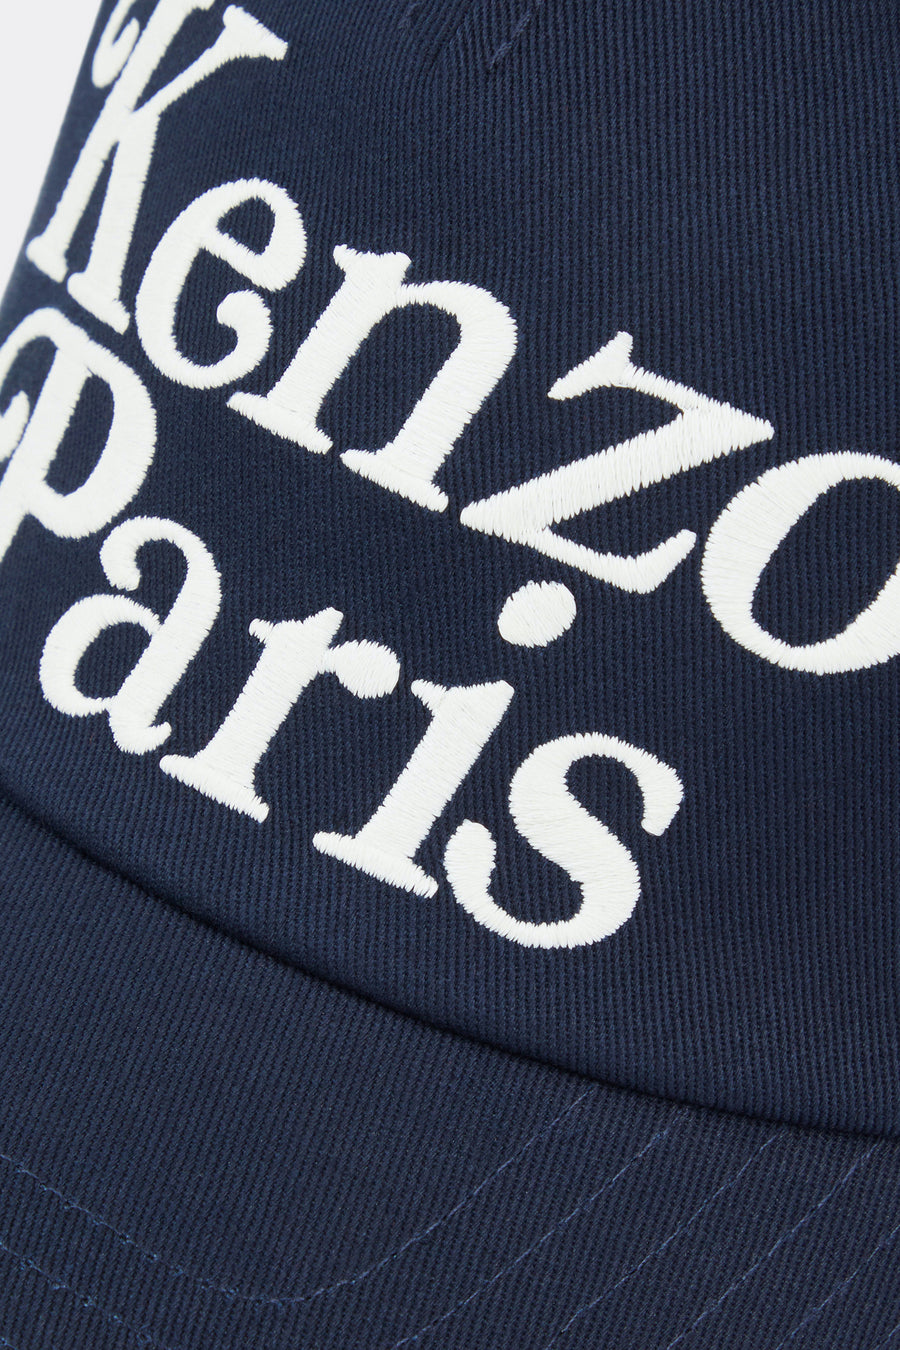 KENZO  CAP(NAVY BLUE)